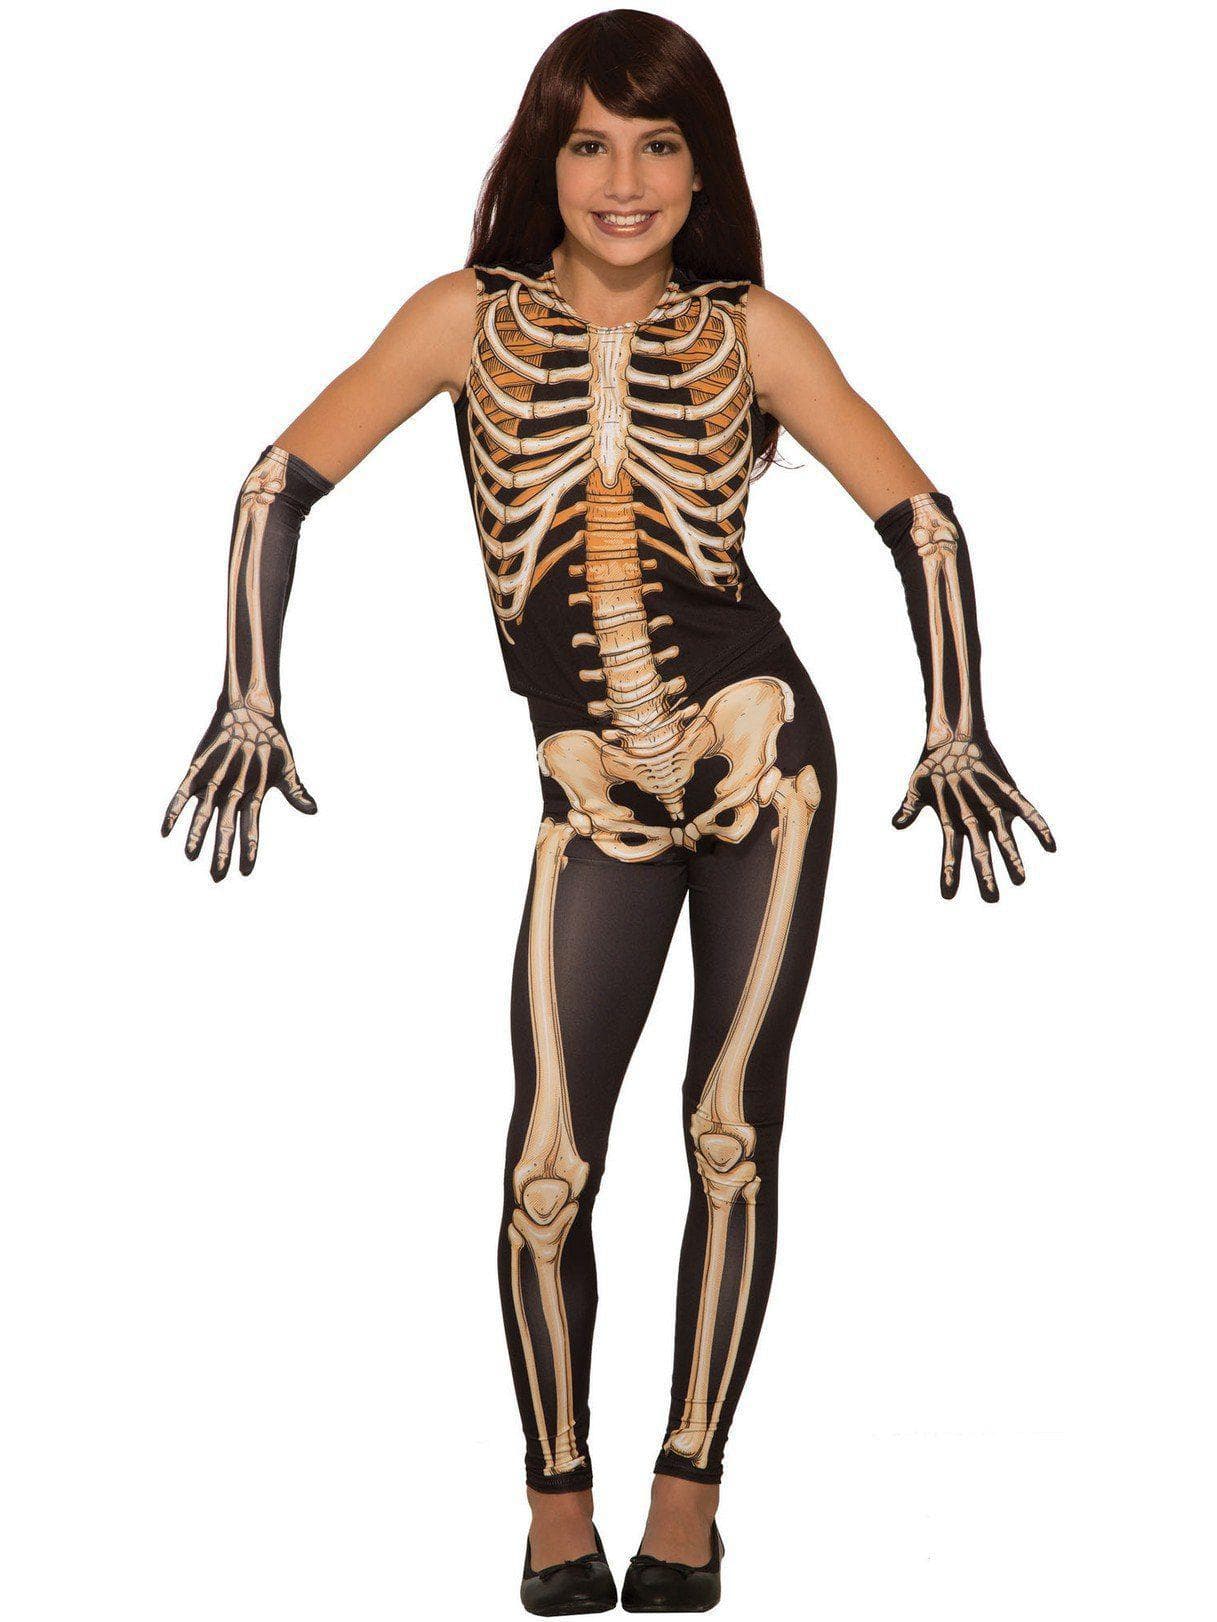 Kid's Pretty Bones Costume - costumes.com